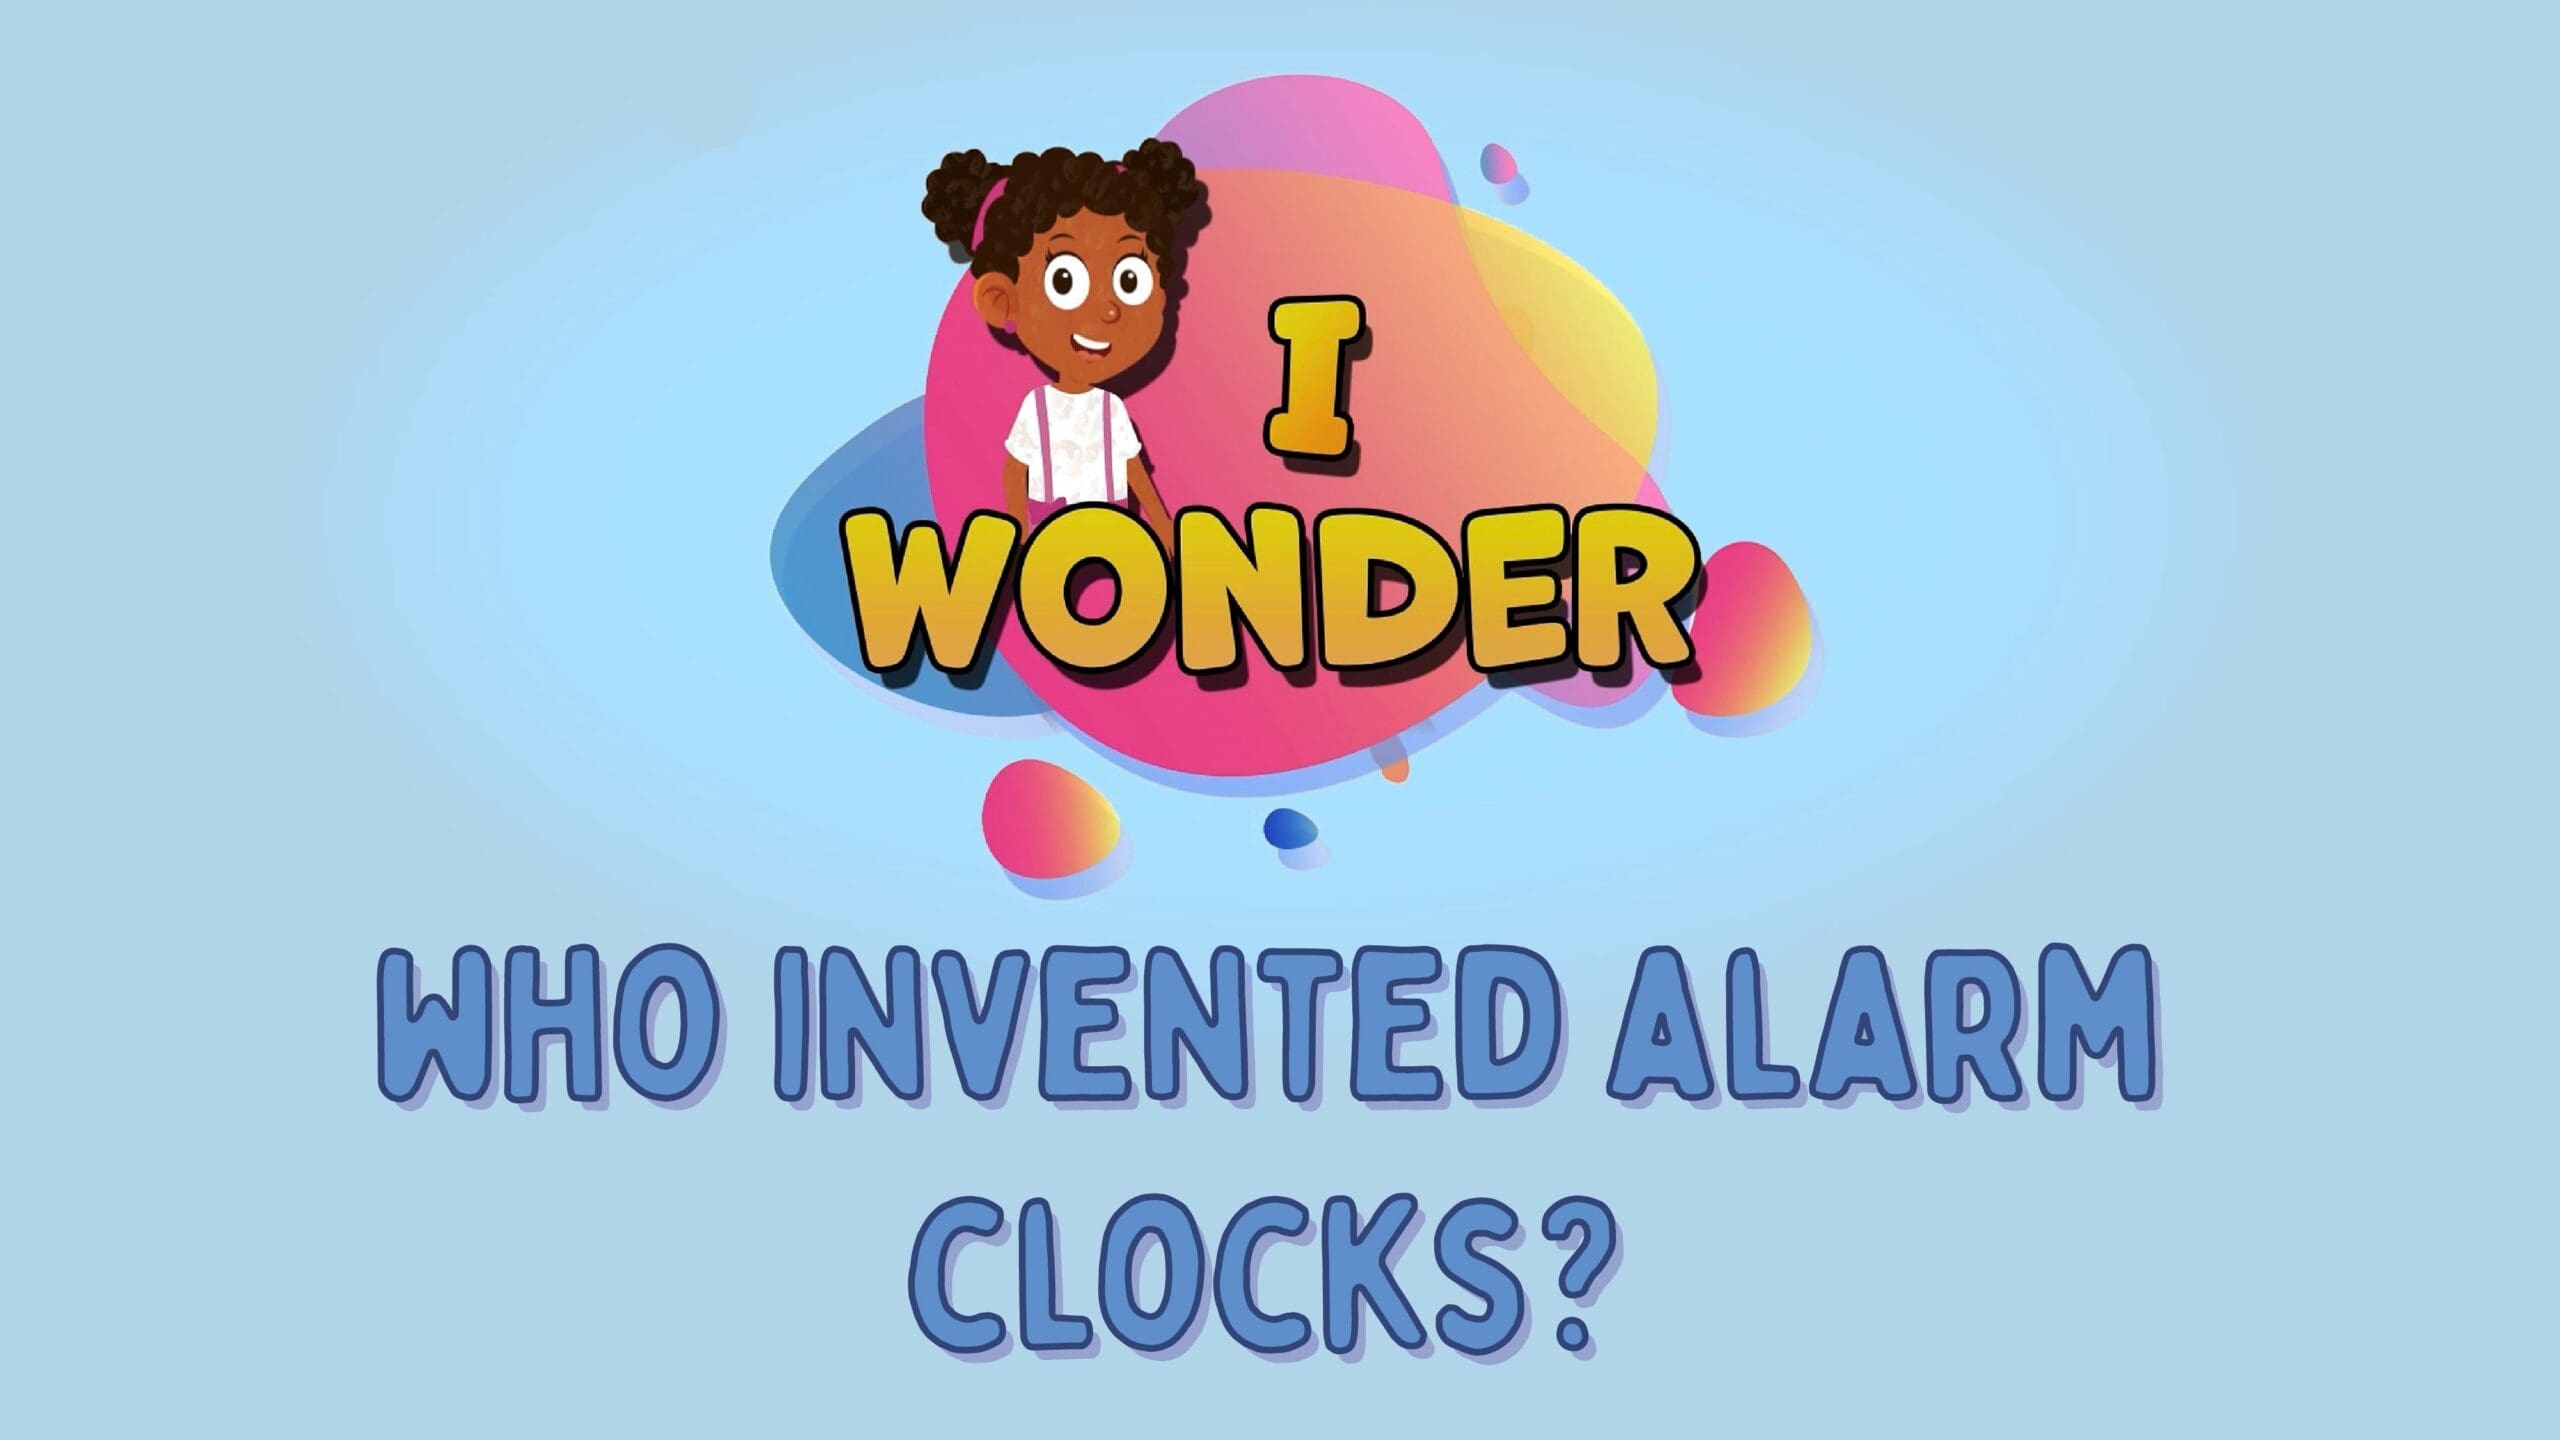 Who invented alarm clocks